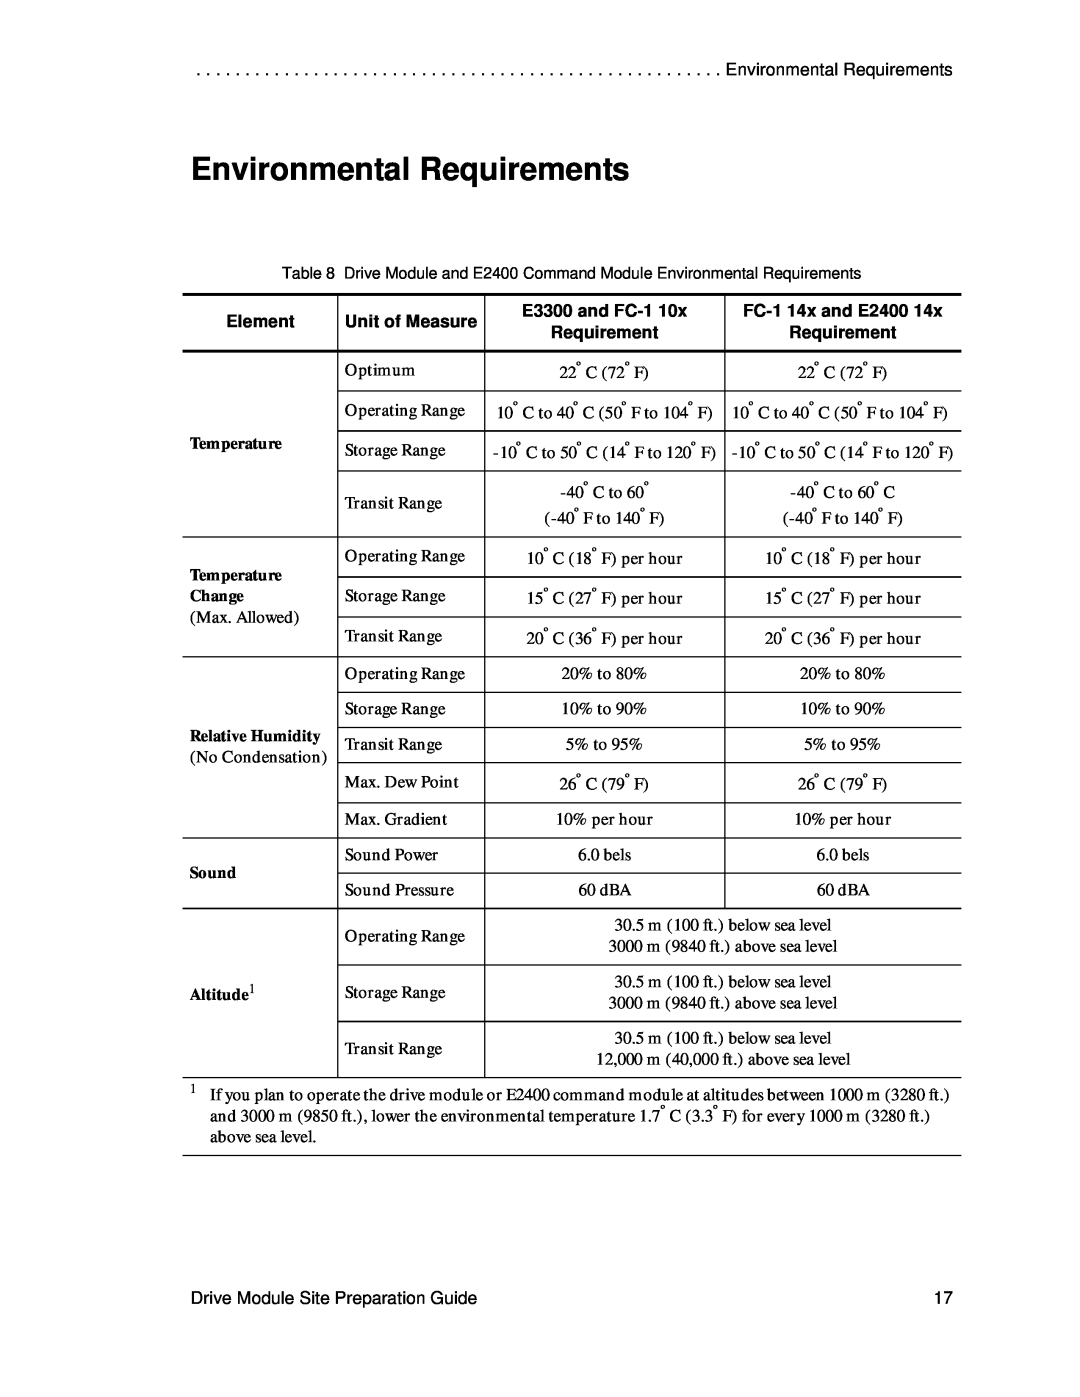 LSI DF1153-E1 Environmental Requirements, Element, Unit of Measure, E3300 and FC-110x, FC-114x and E2400, Temperature 